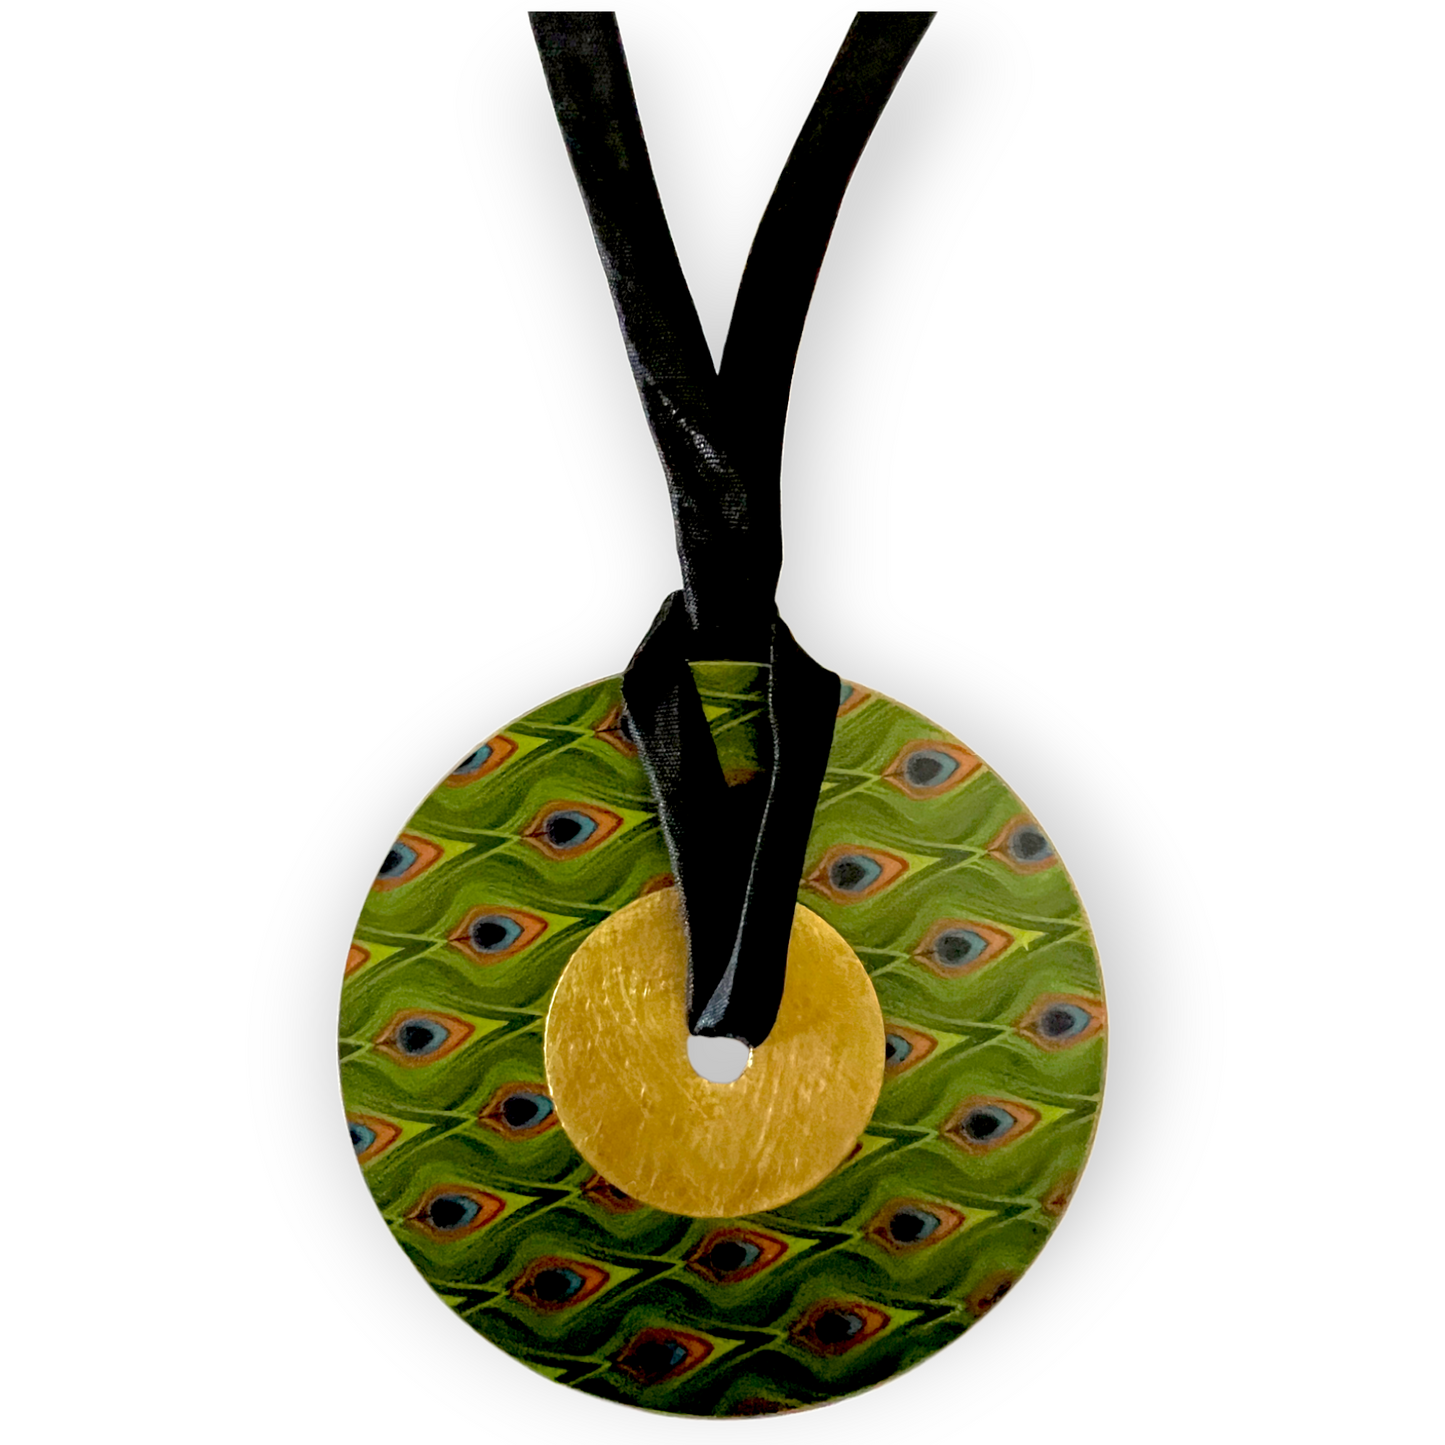 Necklace belt combo that is globally inspired (Inda) - Sundara Joon